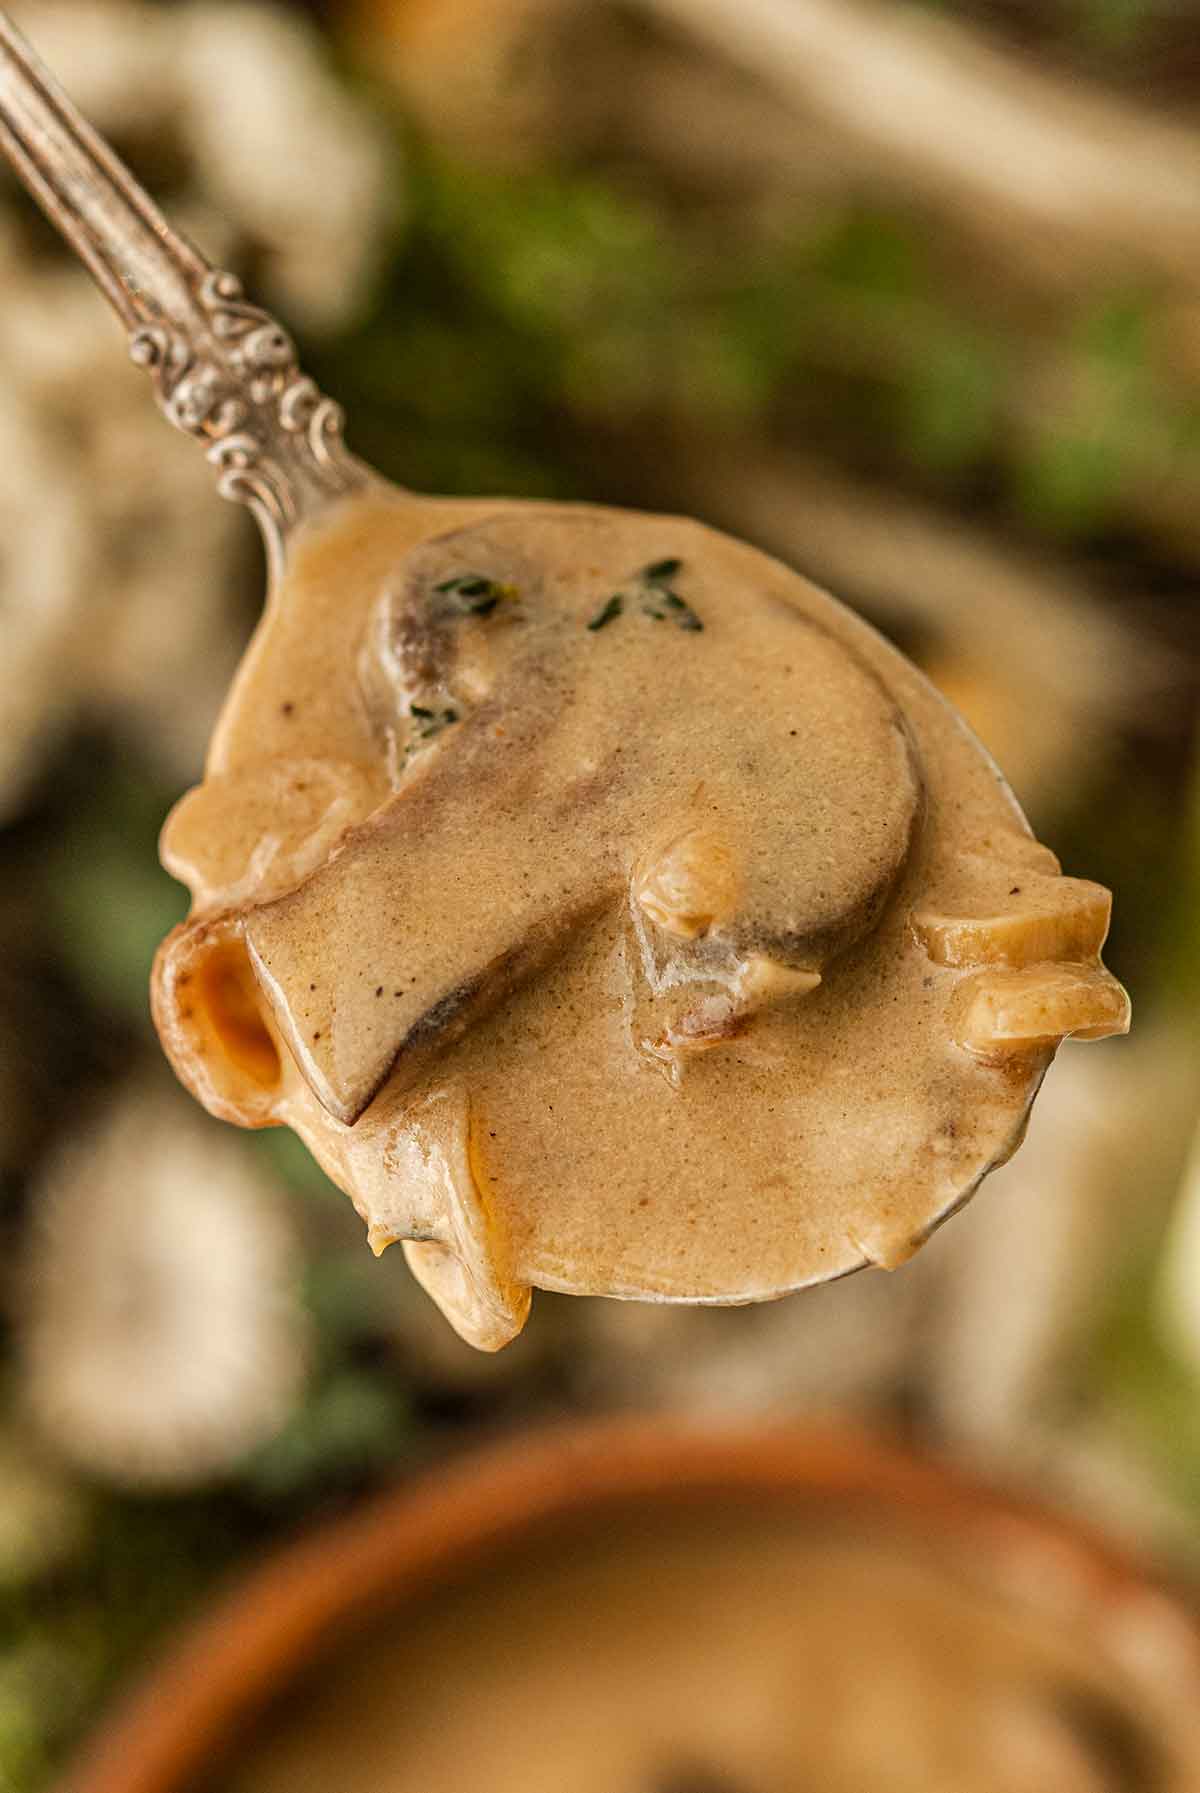 A spoon full of white wine mushroom sauce.